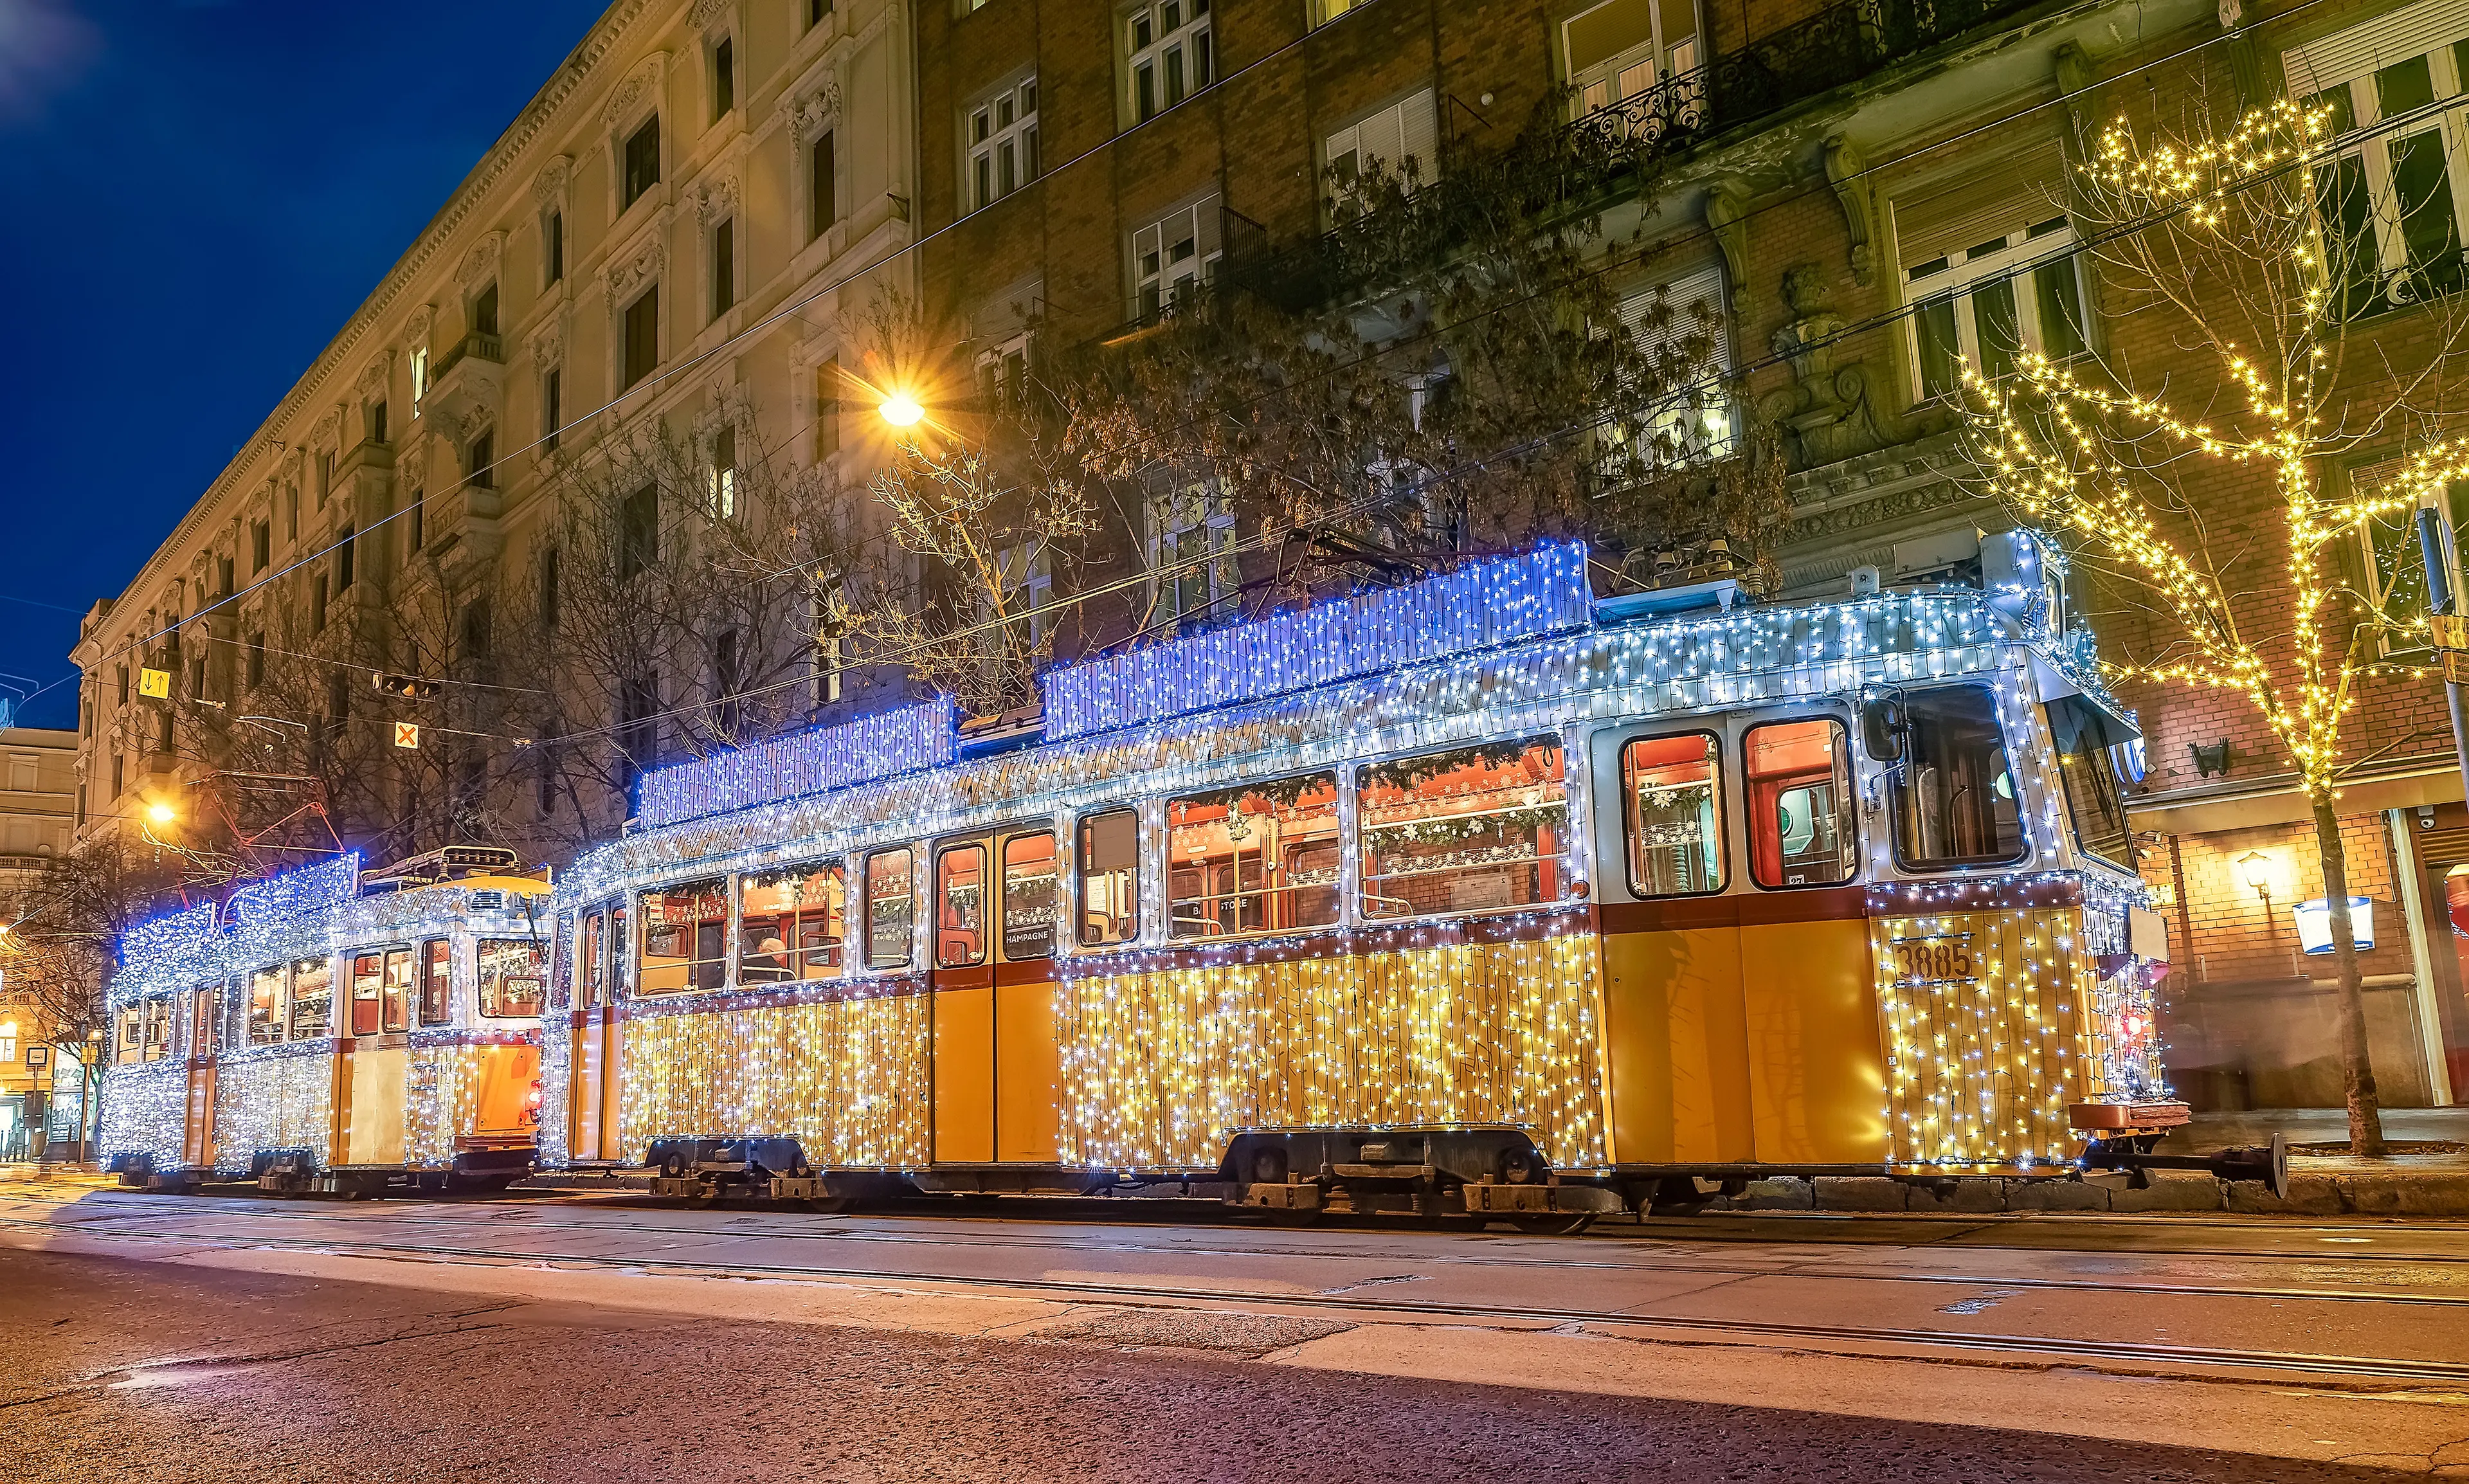 Light tram